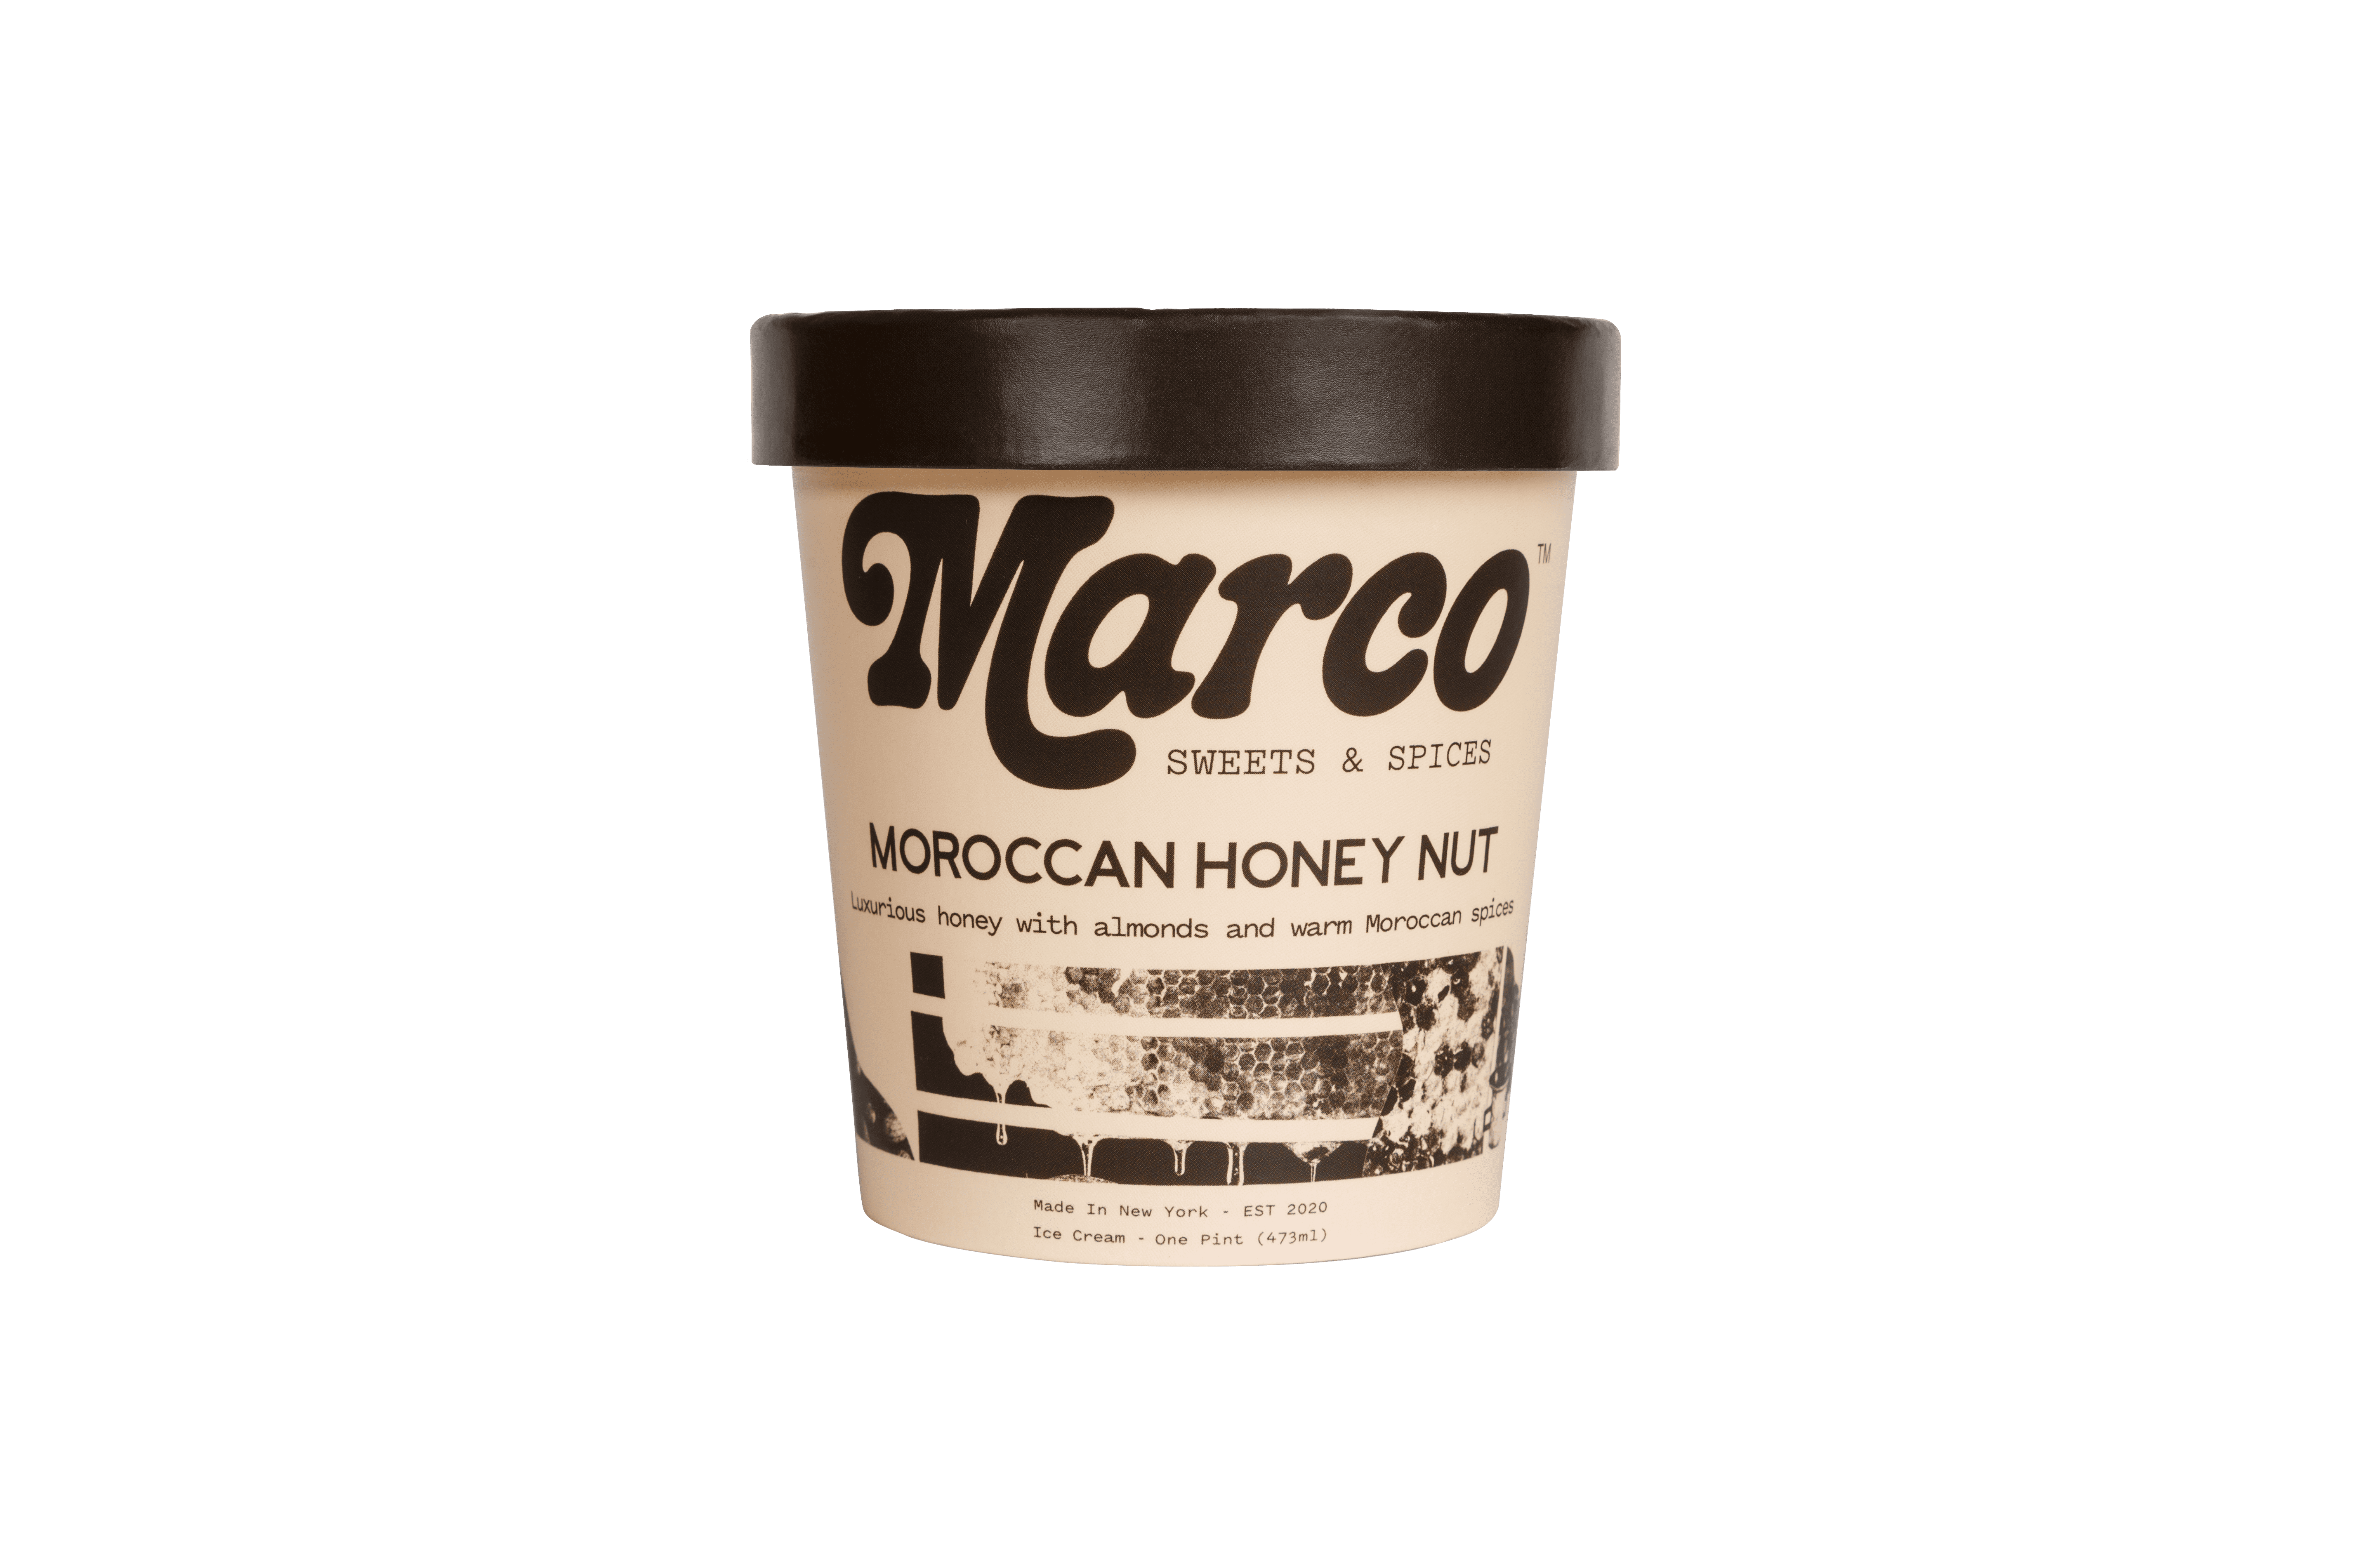 Marco Sweets Moroccan Honey Nut Ice Cream Pint 8 units per case 16.0 oz